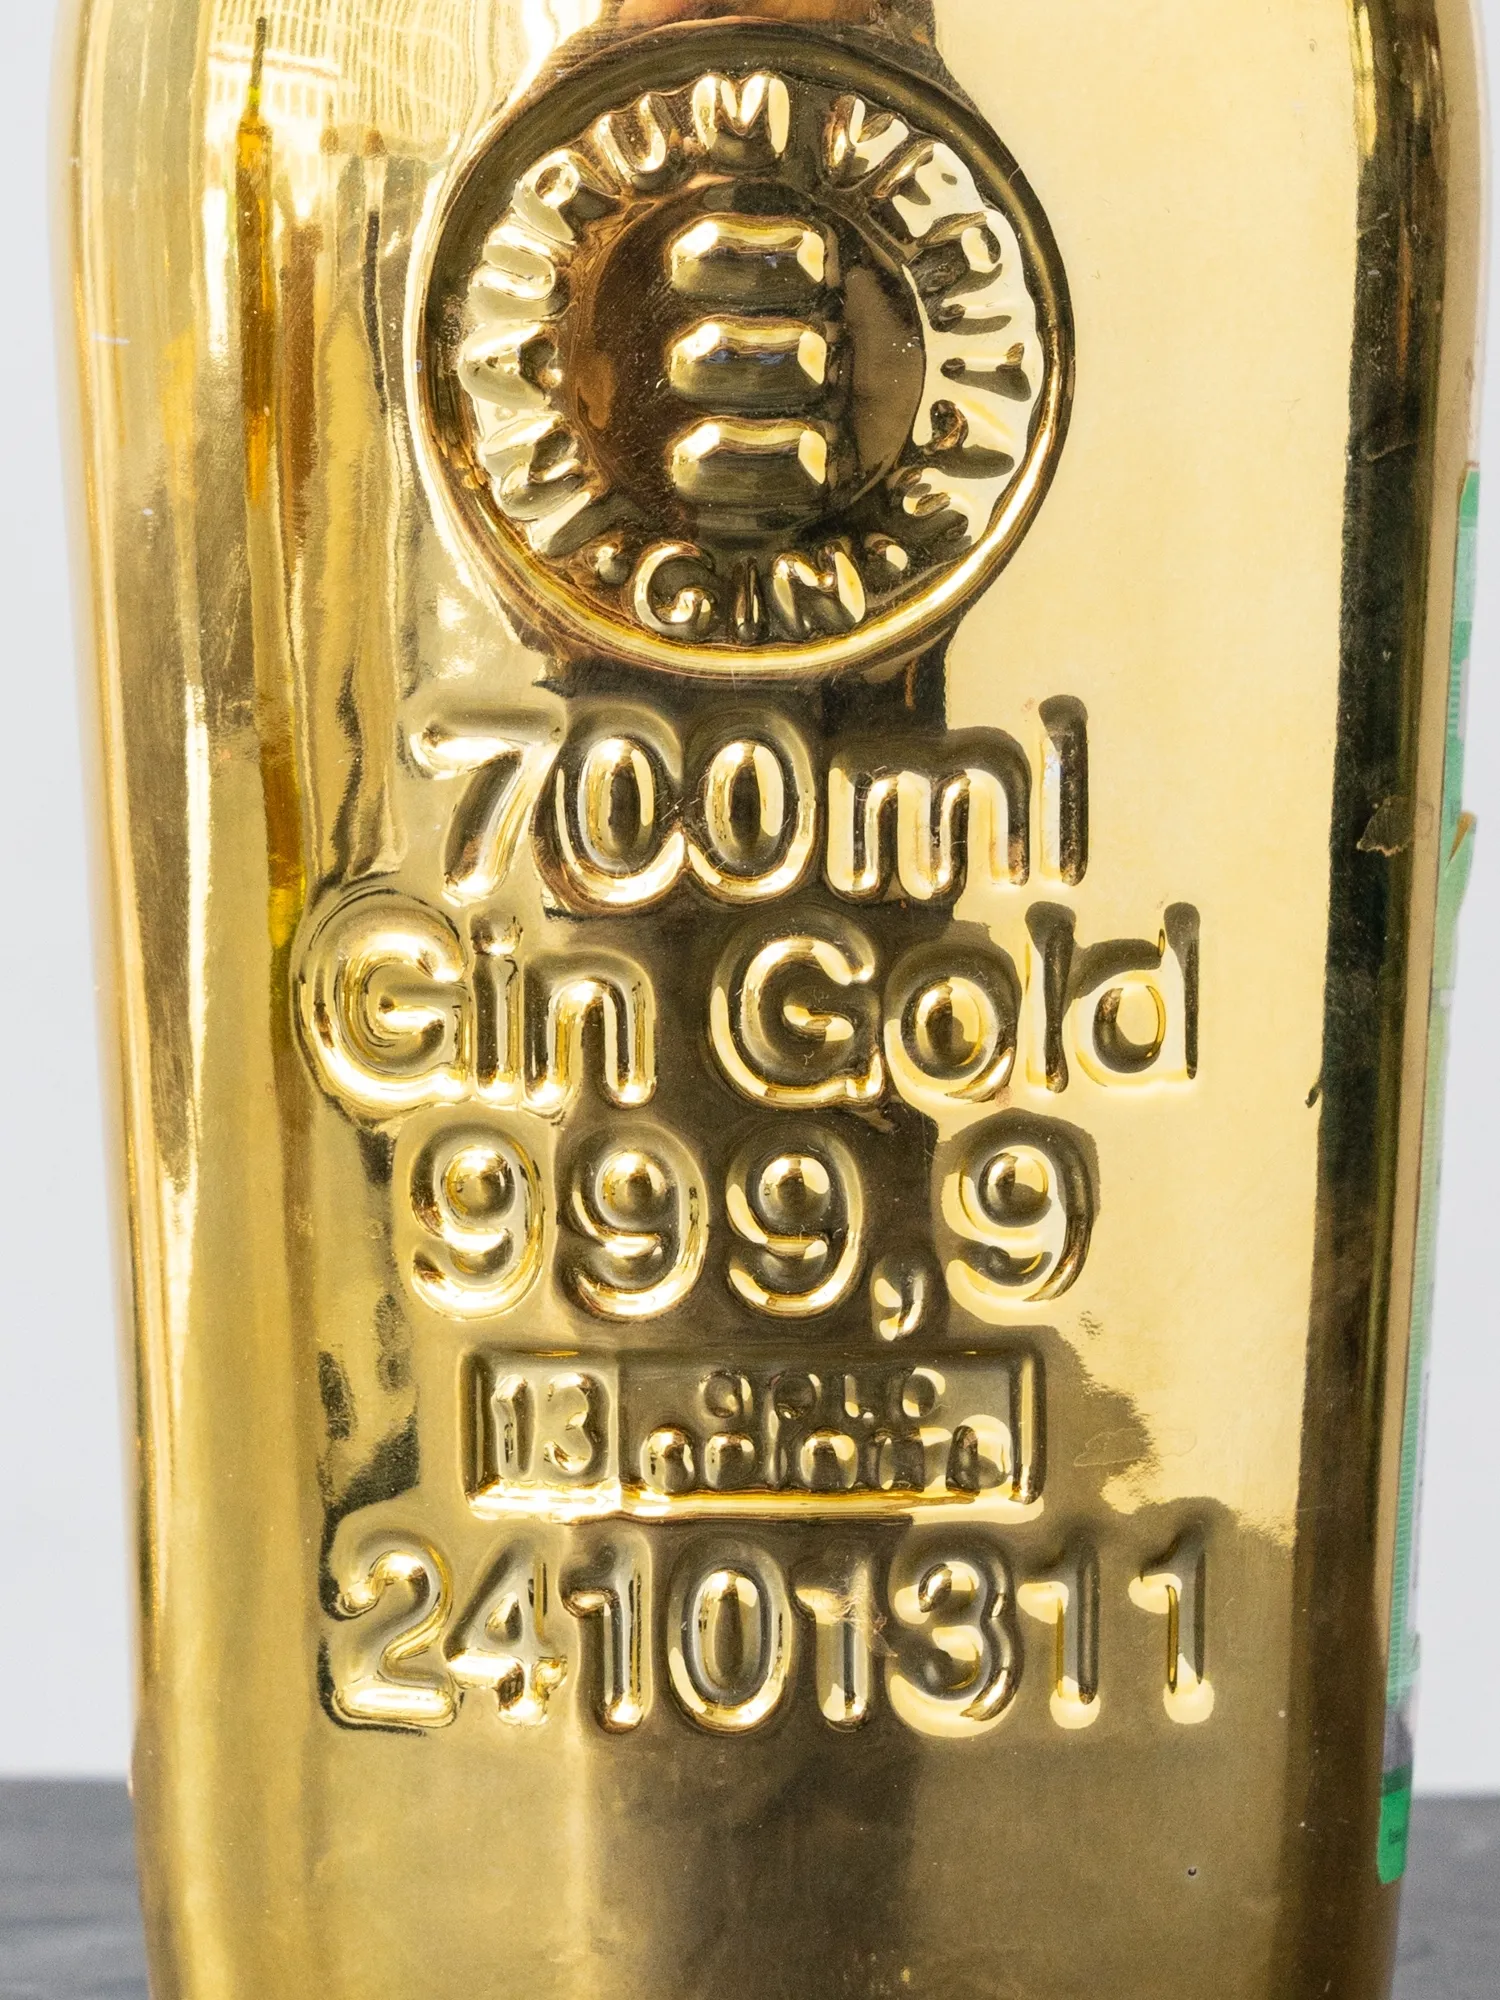 Джин Gold 999.9 Gin Finest Blend / Голд Джин 999,9